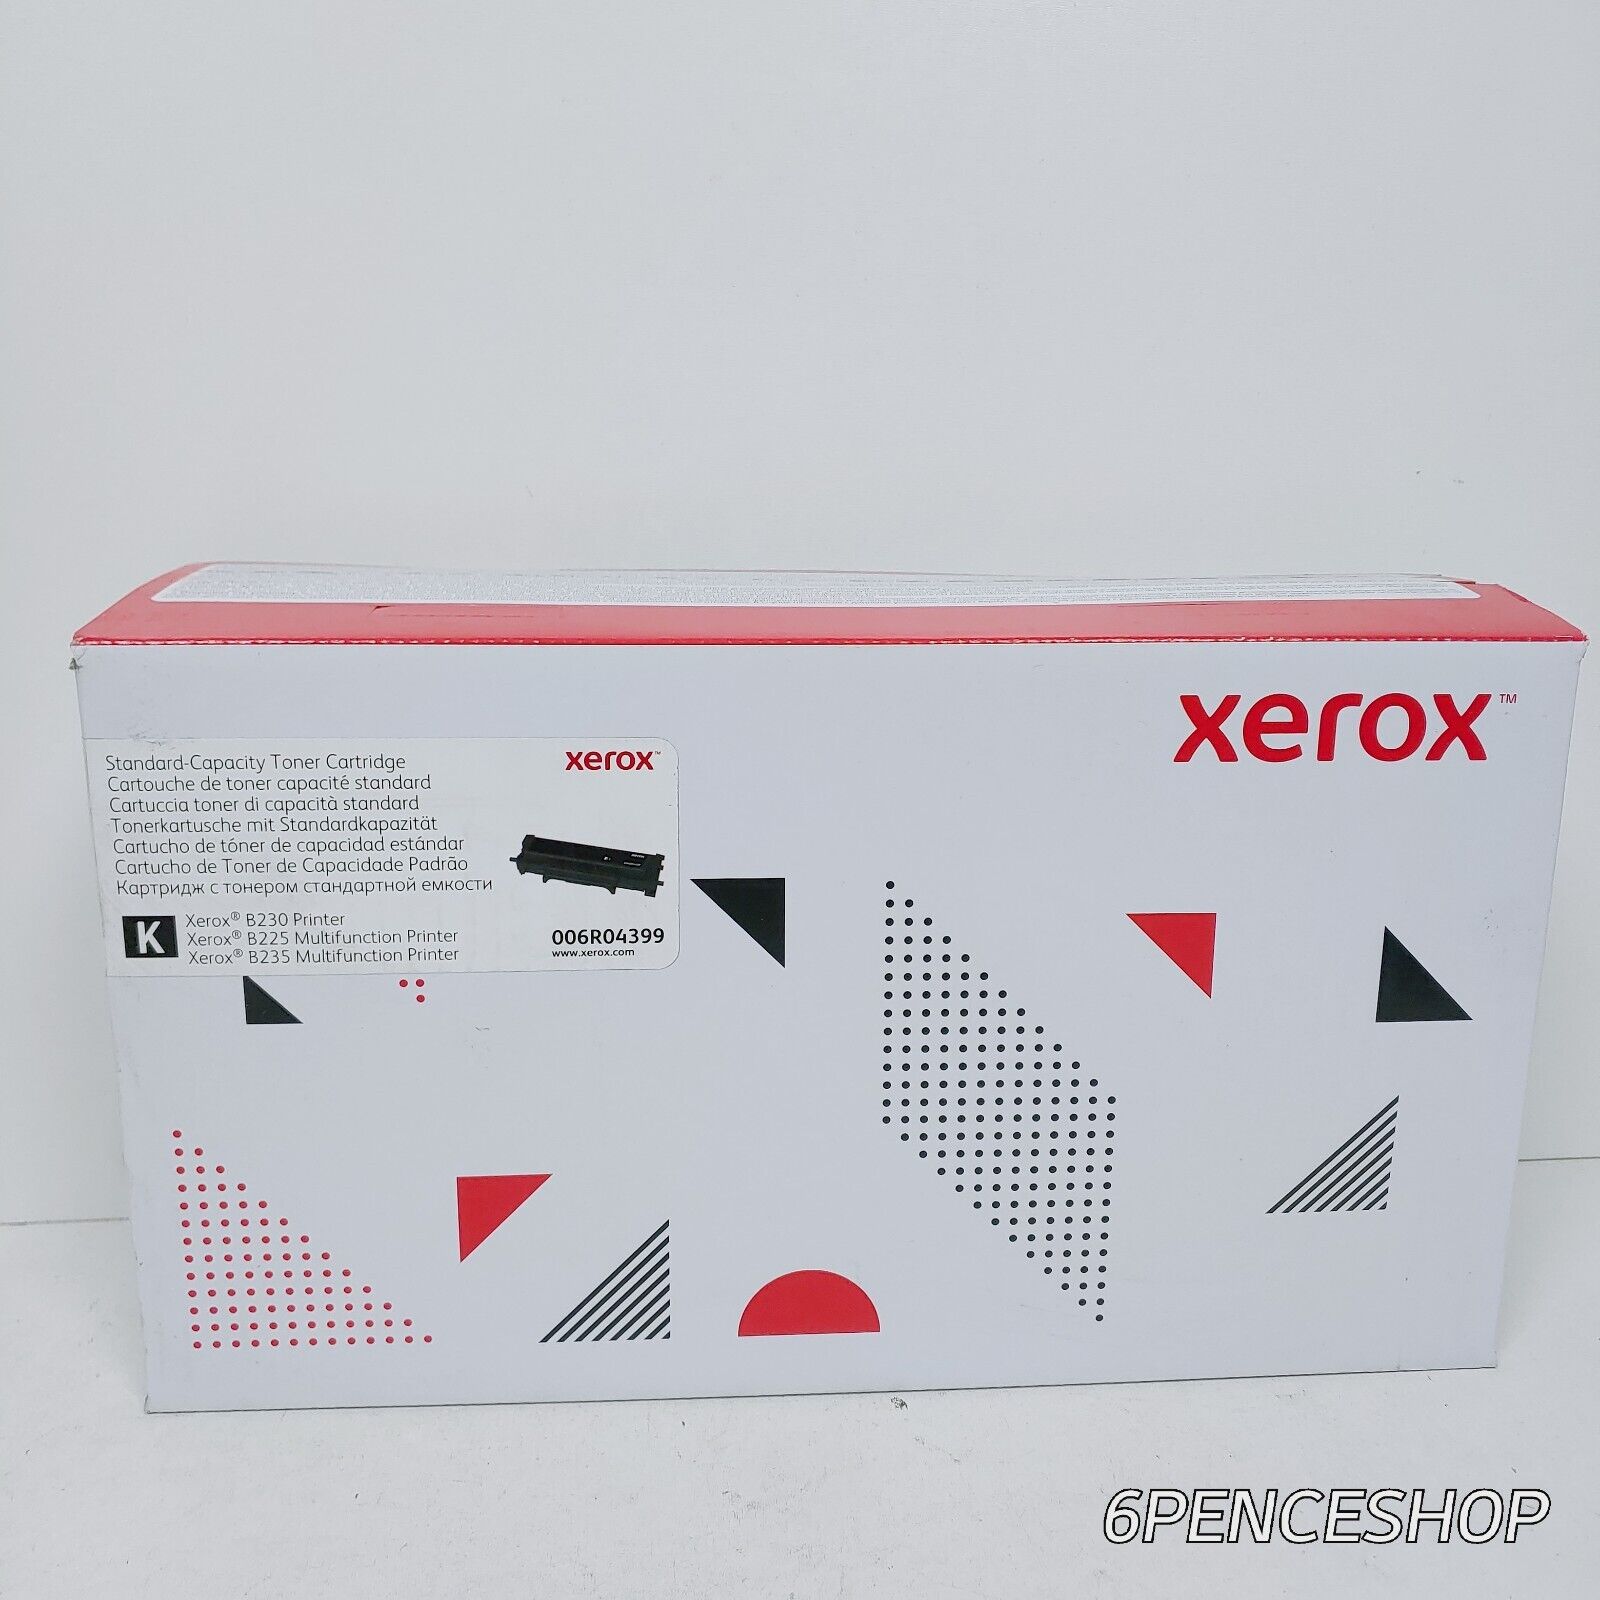 *Deformed Box* Xerox 006R04399 Black Standard Capacity Toner